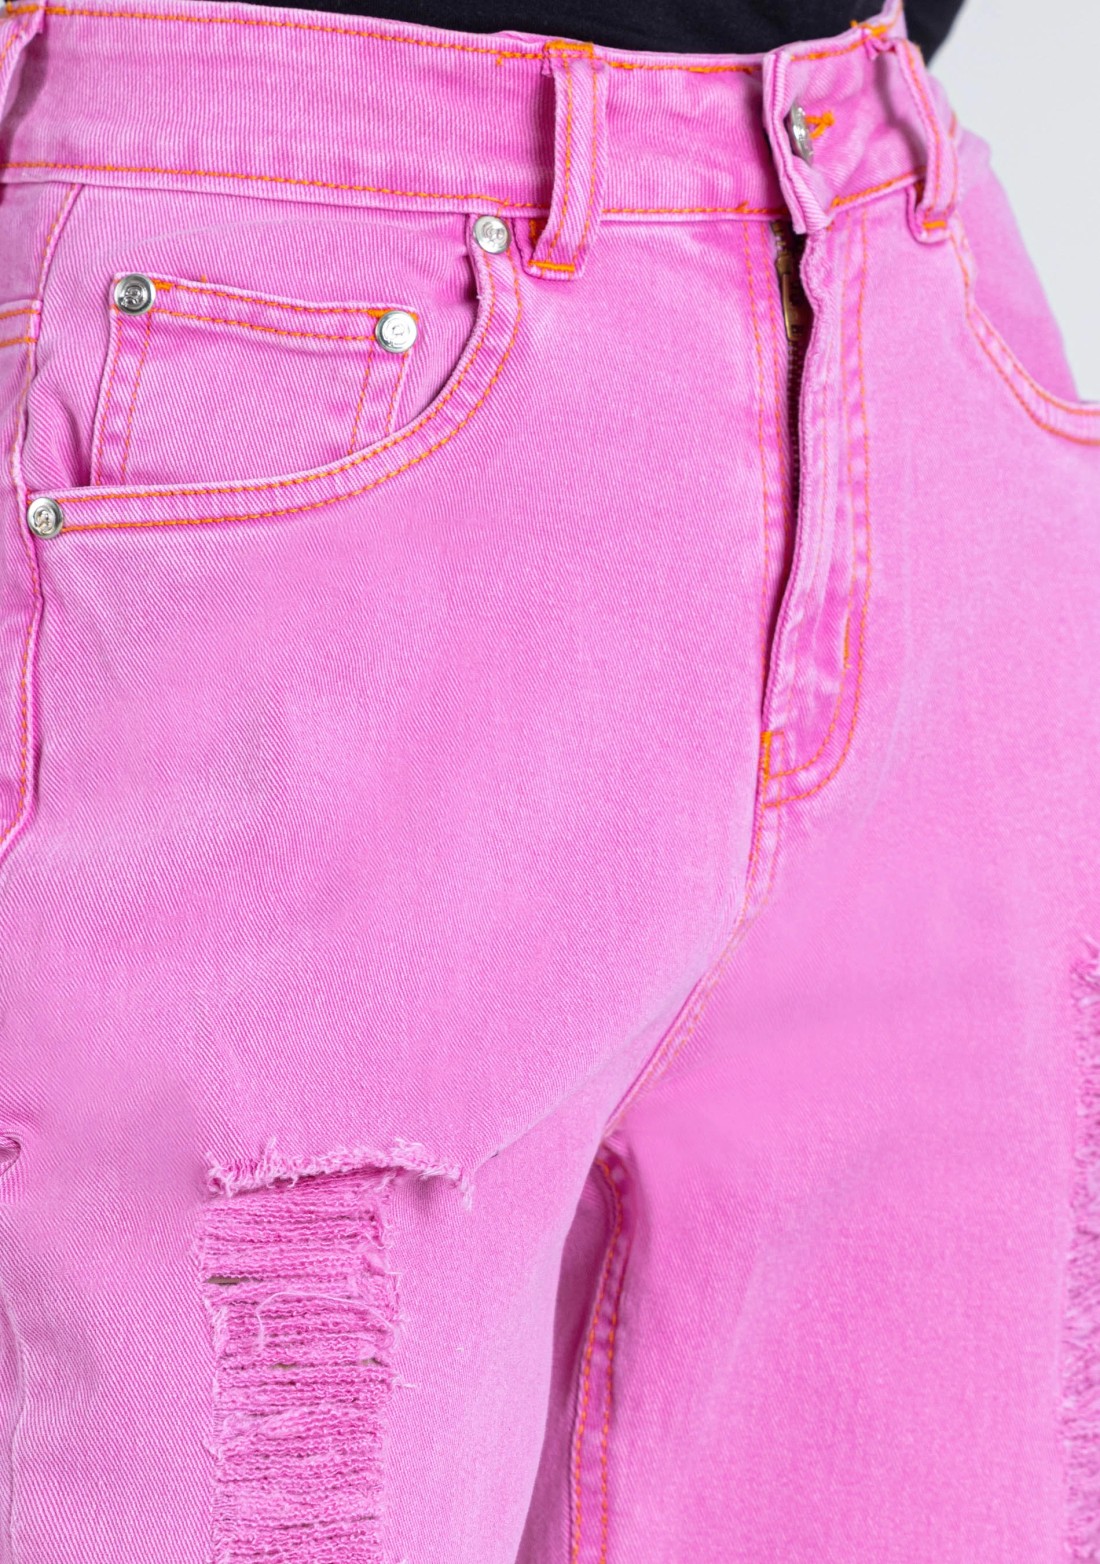 Pink Wide Leg Women's Distressed Jeans